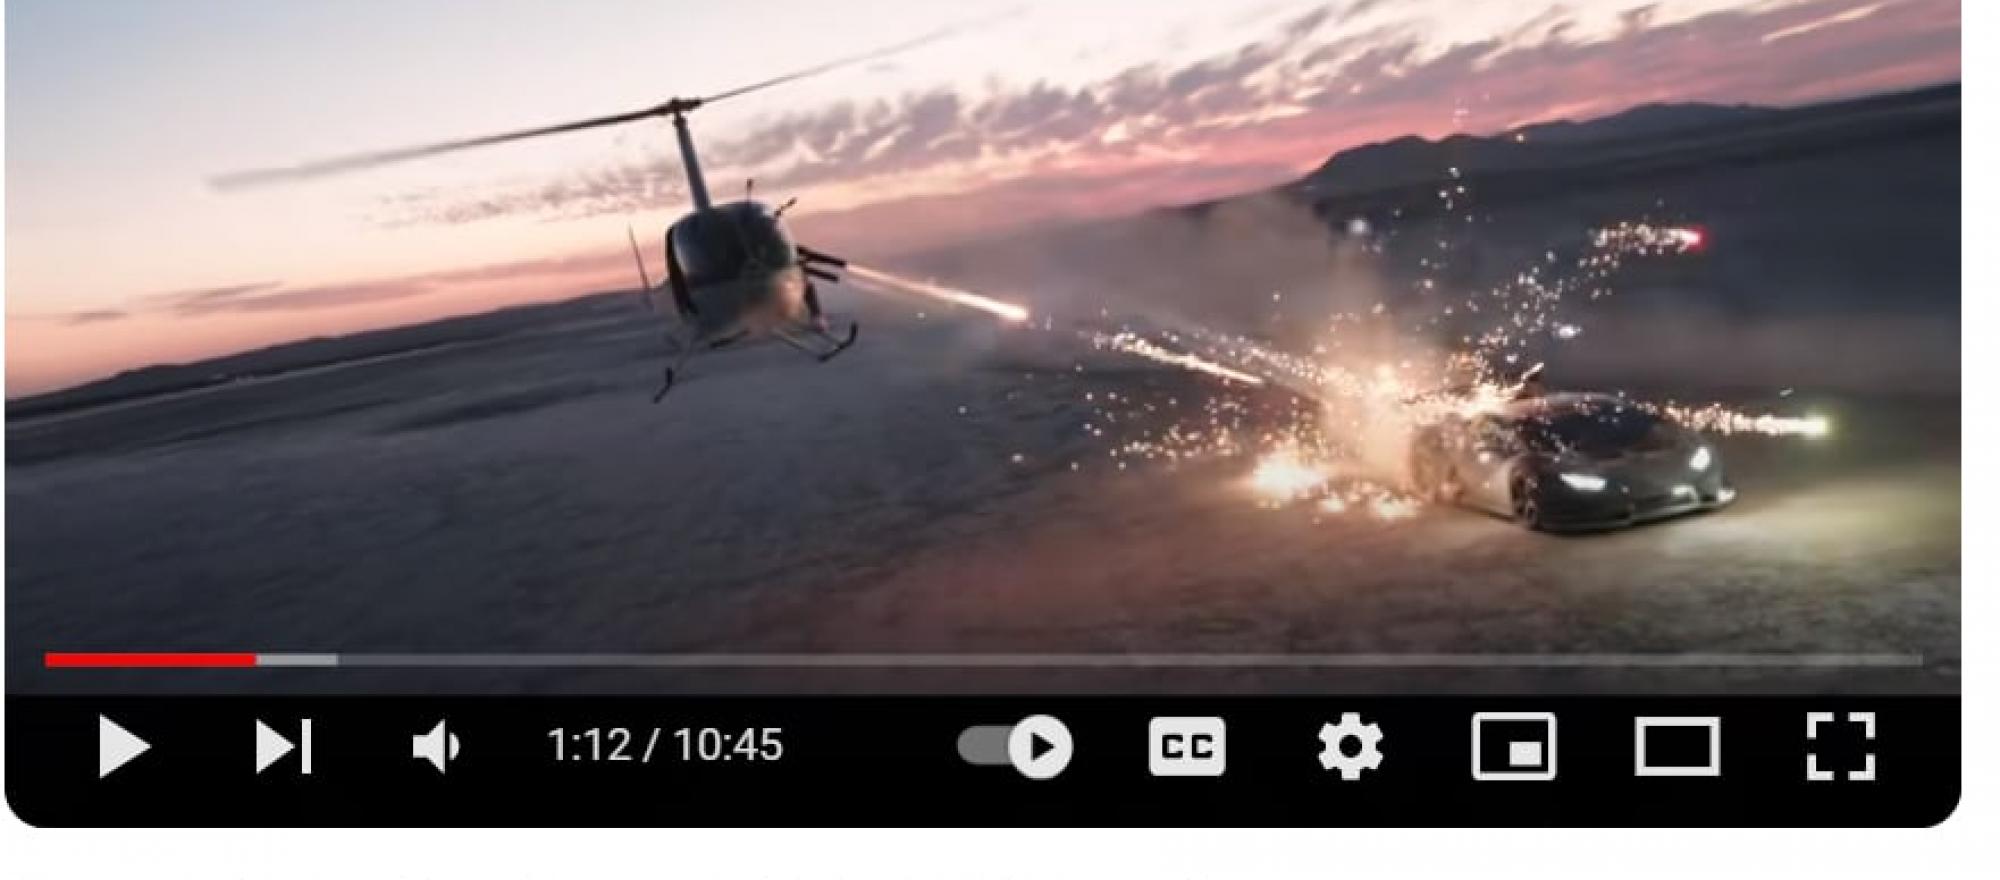 Explosive Rotorcraft  Stunt Leads To YouTuber’s Arrest